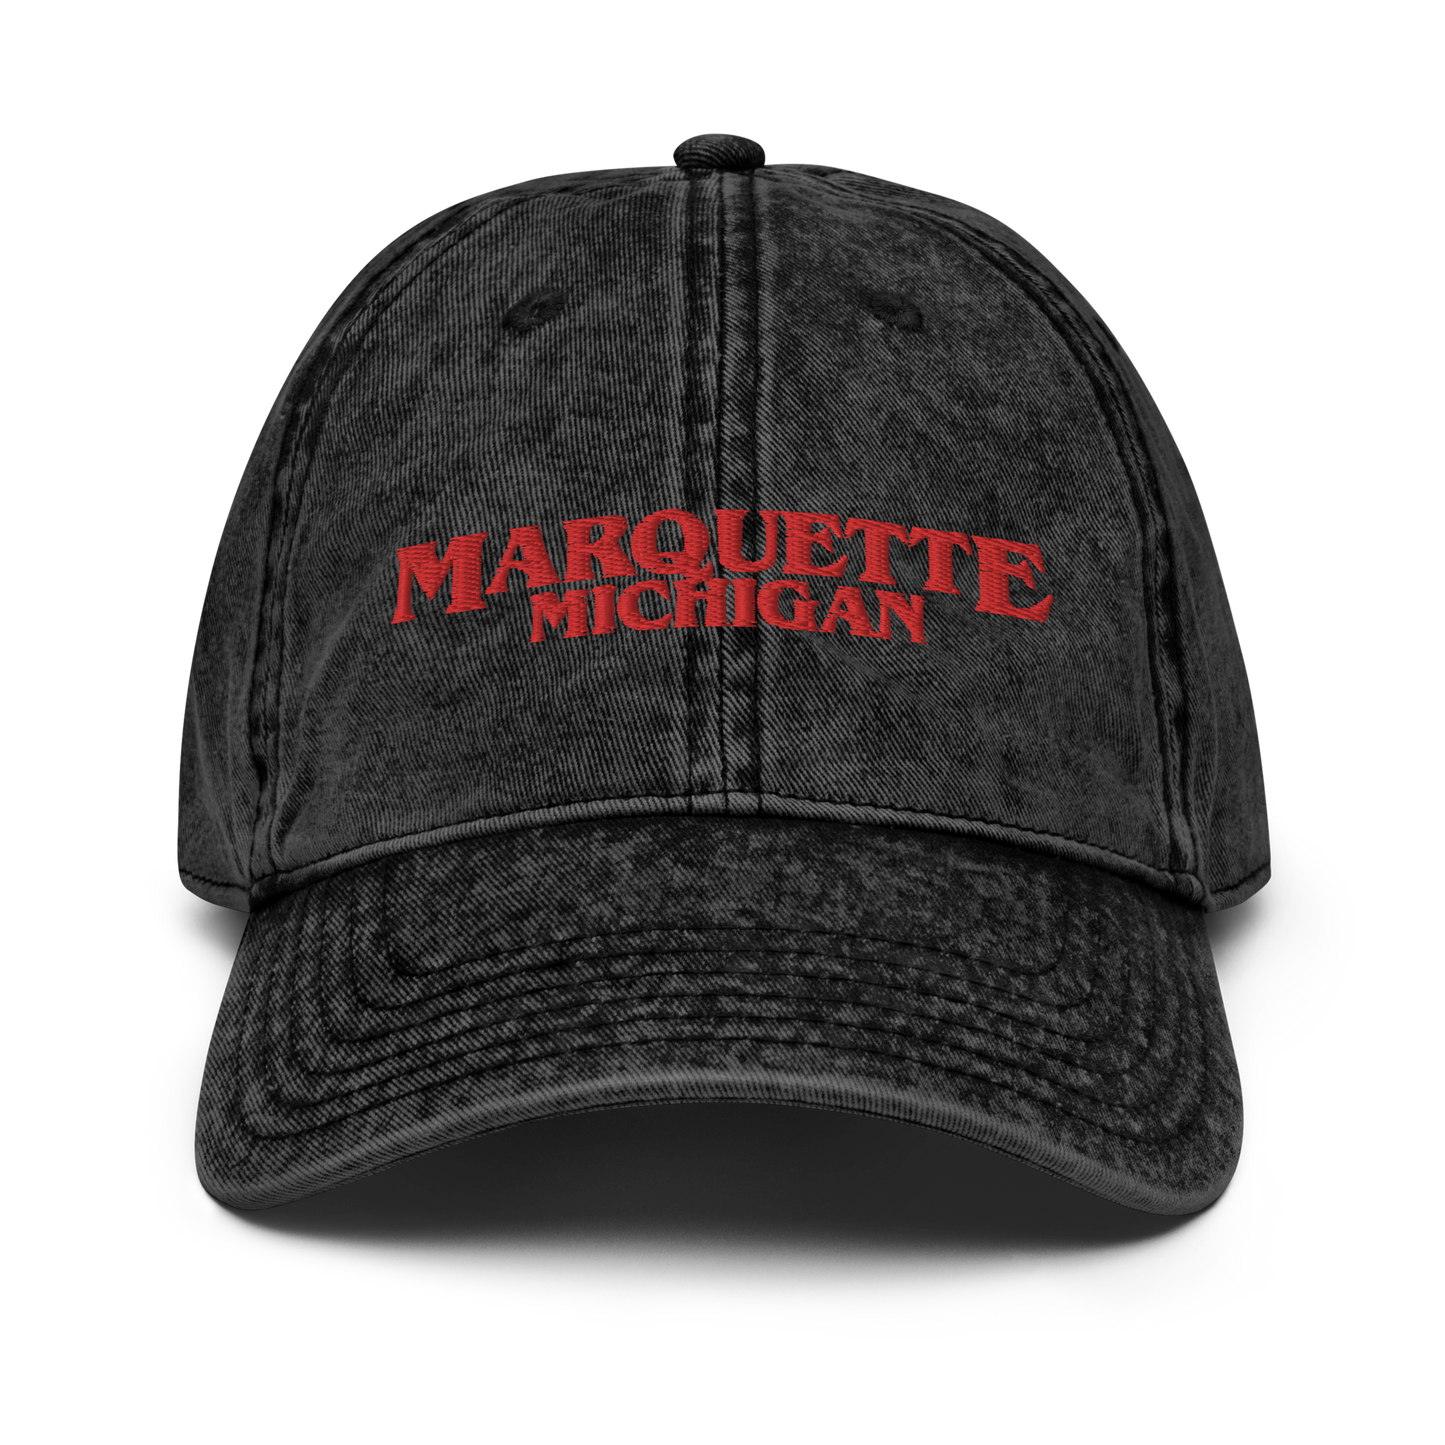 'Marquette Michigan' Vintage Baseball Cap (1980s Drama Parody)